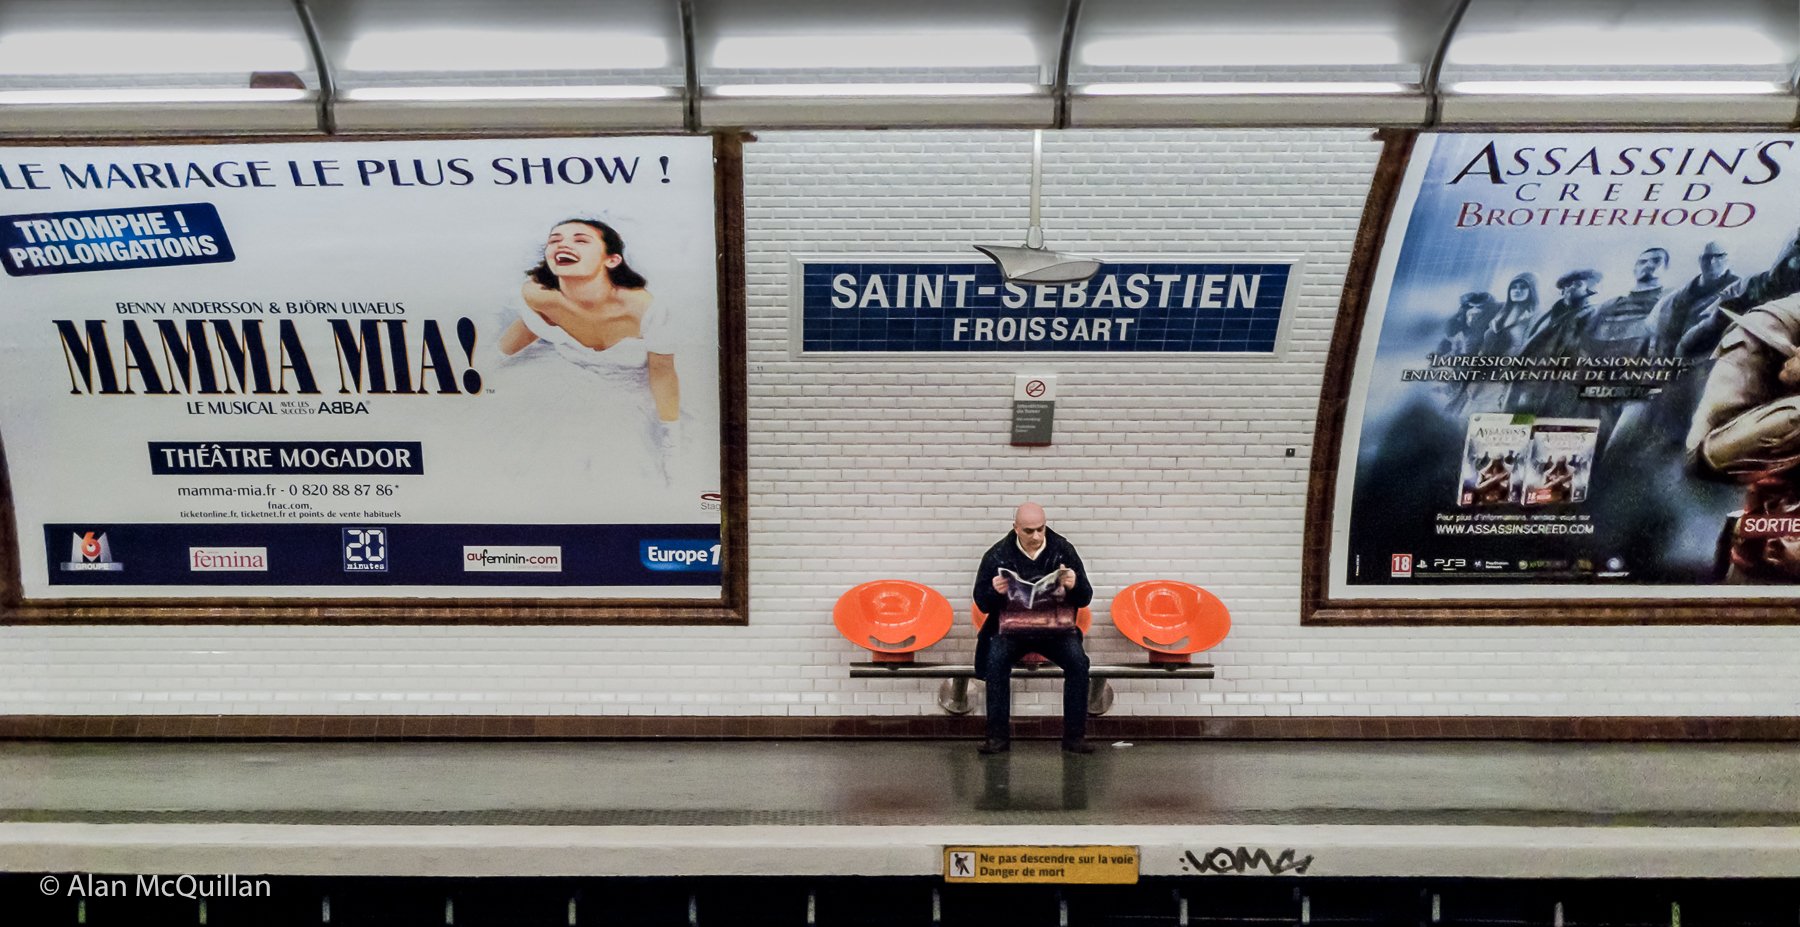 Saint-Sebastian Froissart Metro station, Paris, 2010